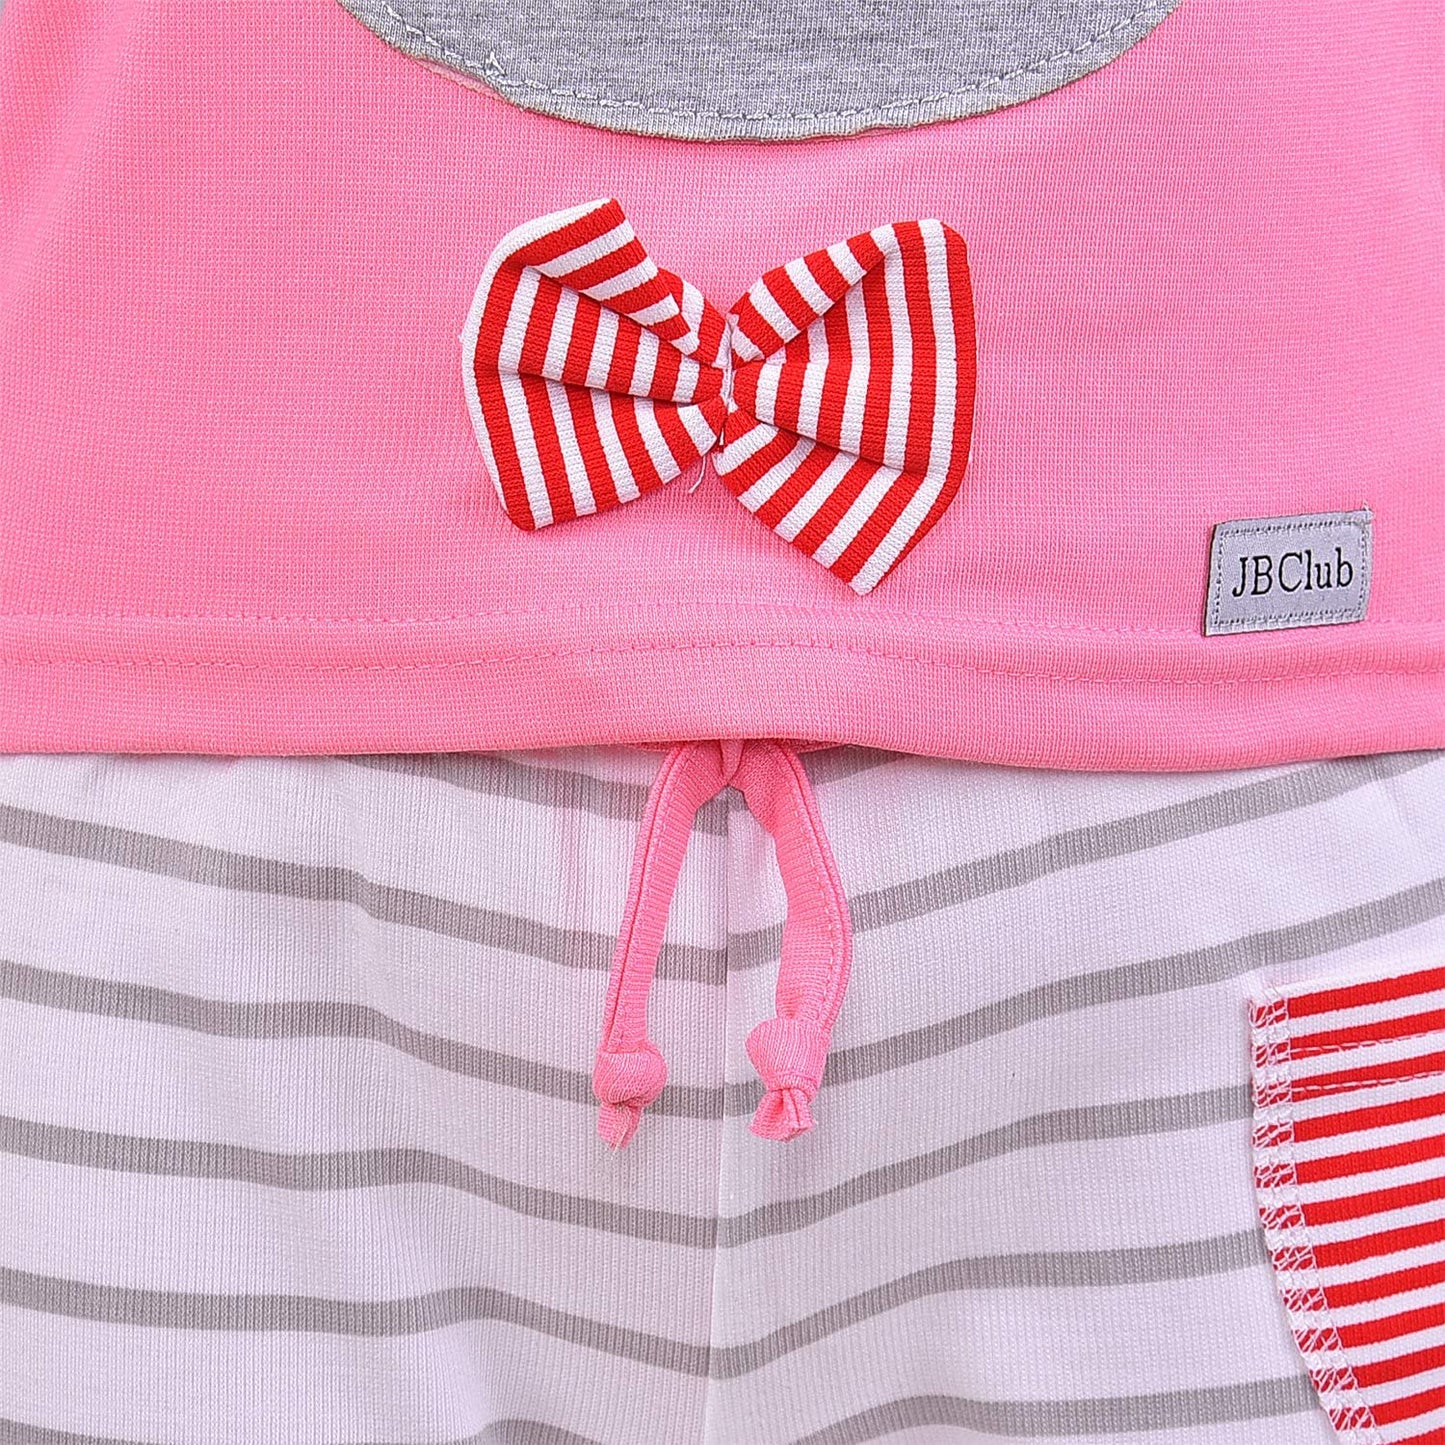 Wish Karo Unisex Clothing Sets for Boys & Baby Girls-(bt21pnk)